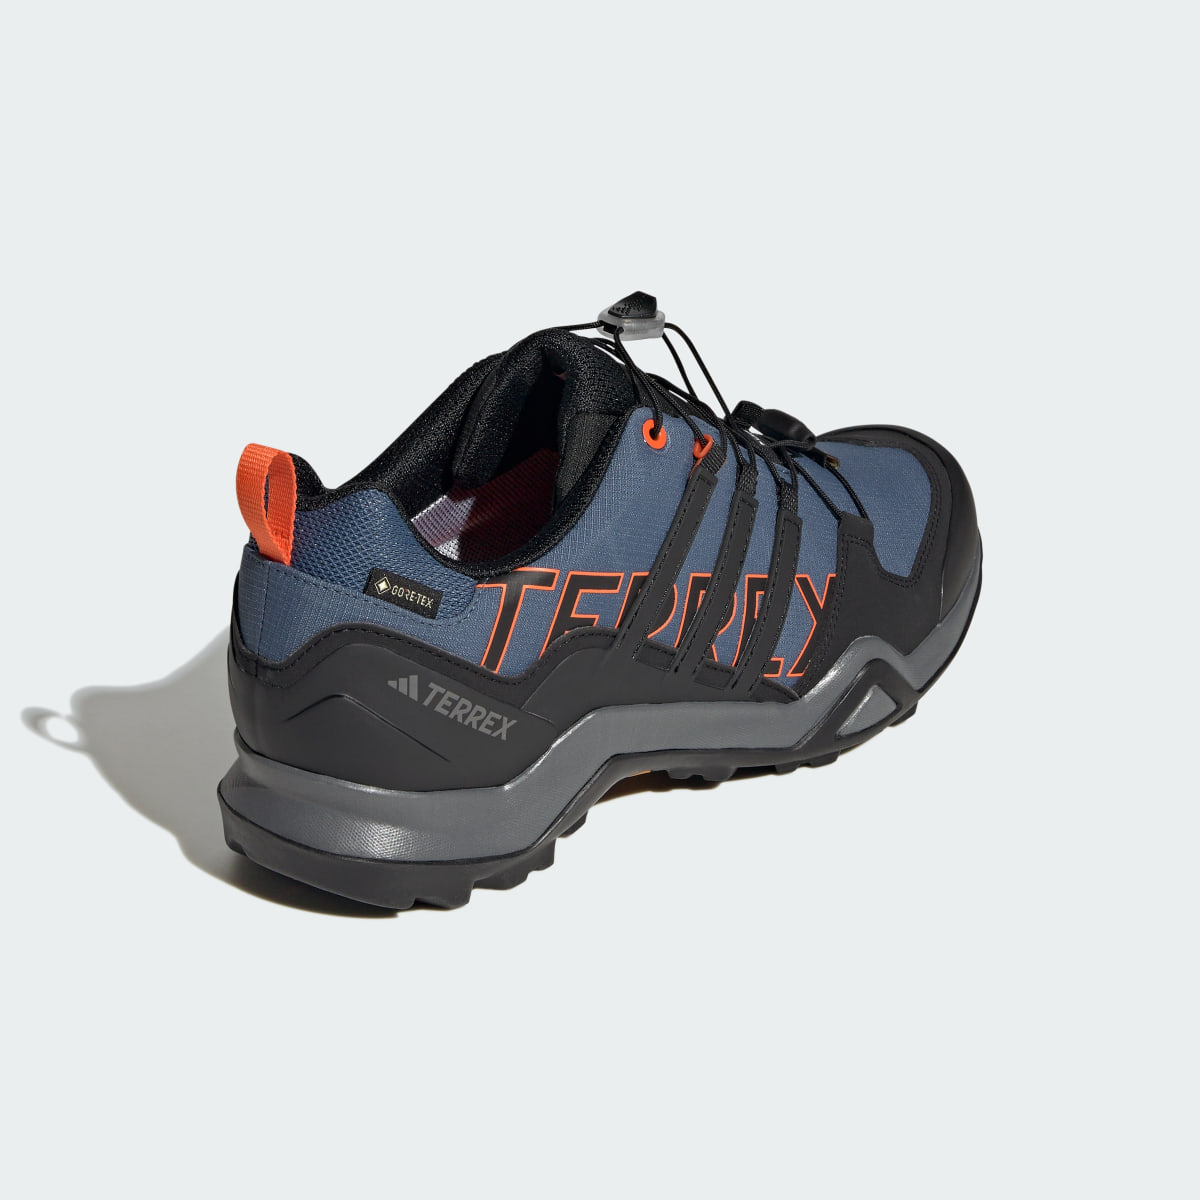 Adidas Chaussure de randonnée Terrex Swift R2 GORE-TEX. 7